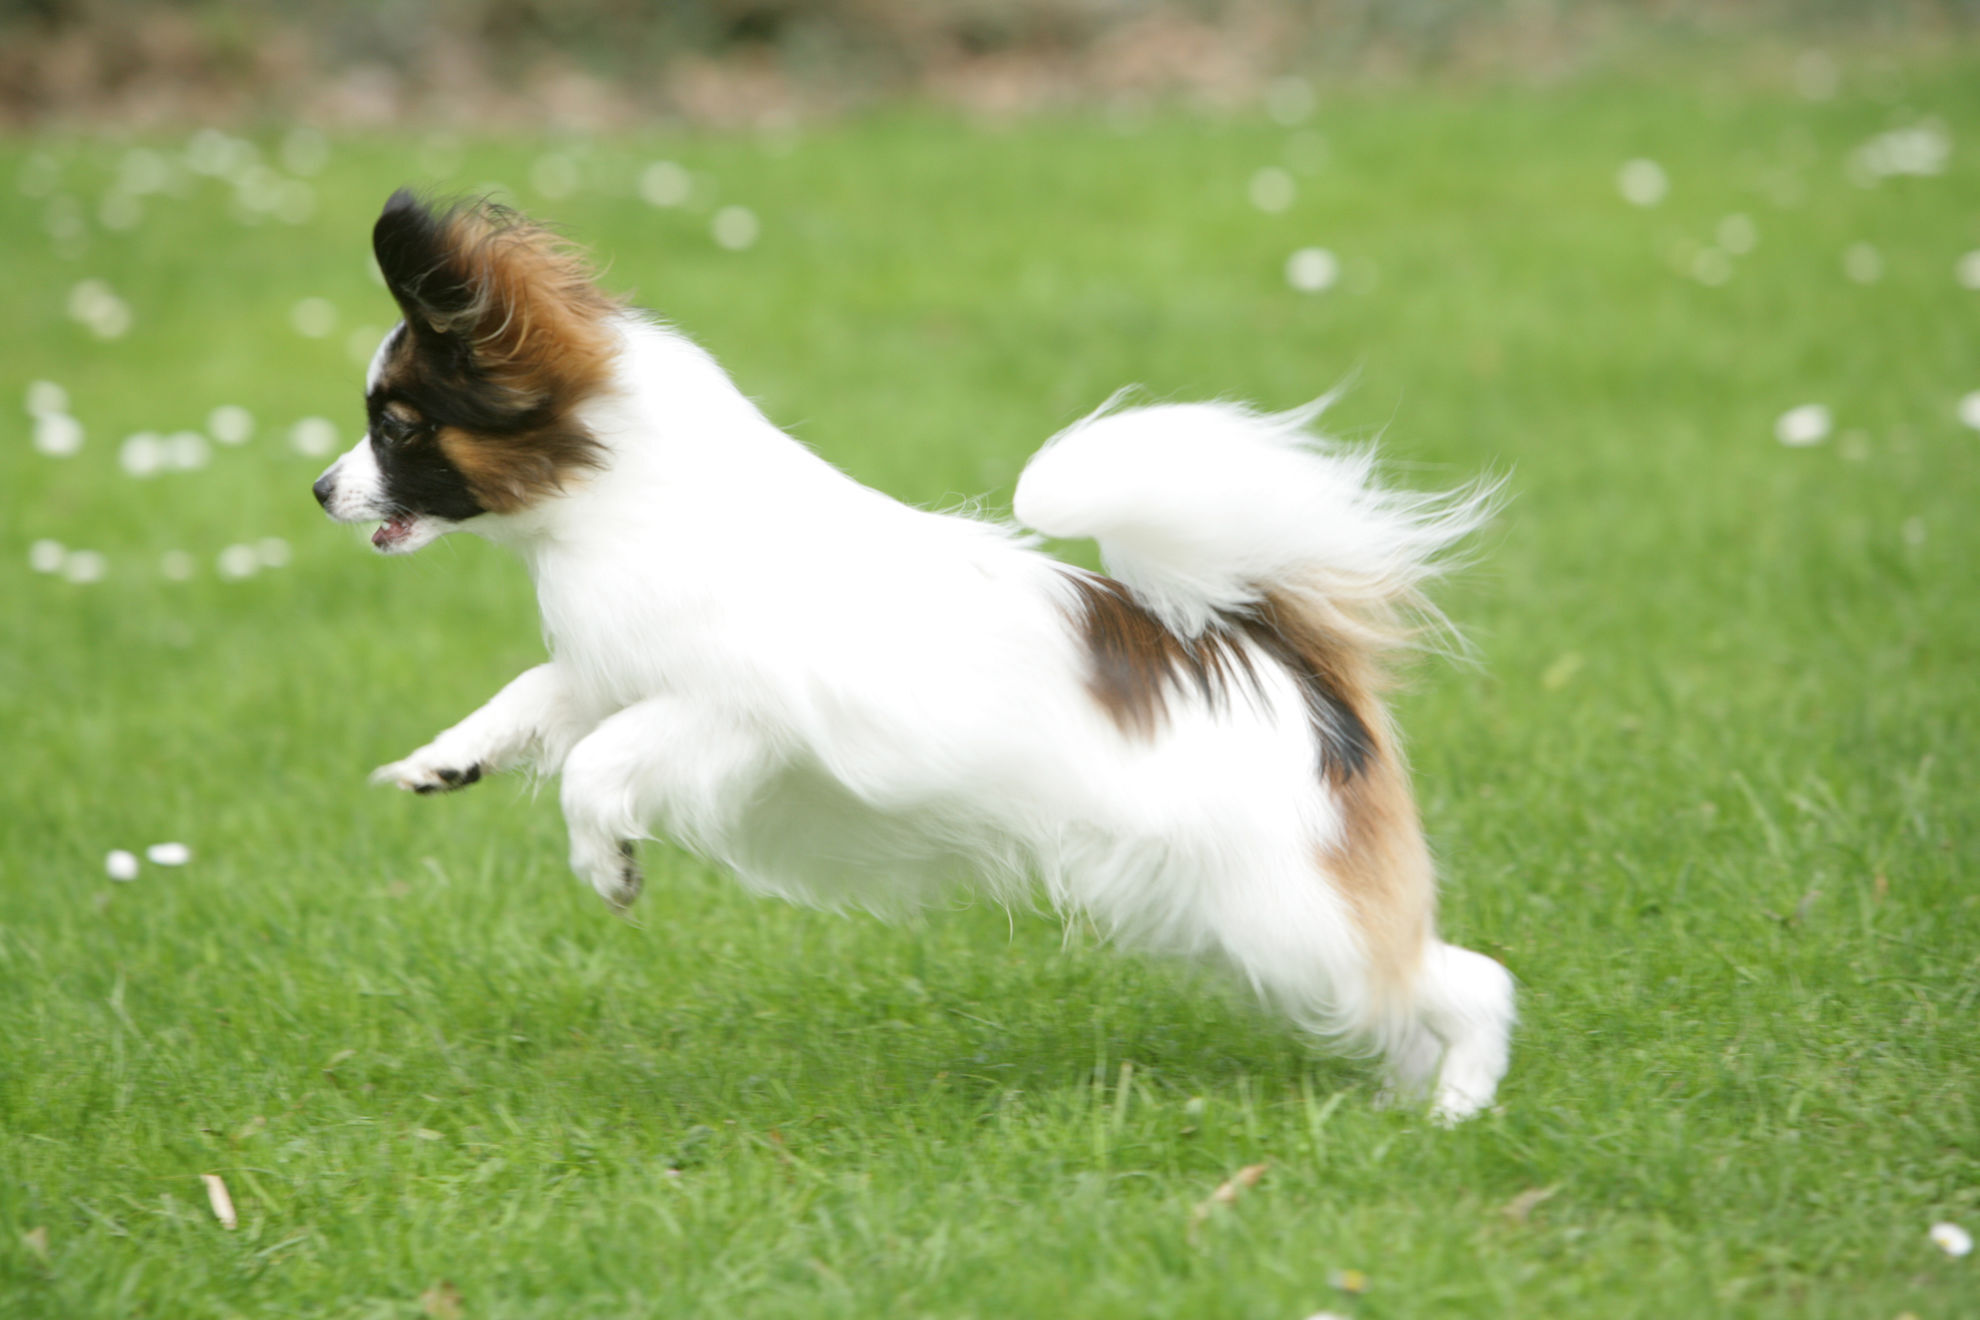 Anjing Papillon kecil, energetik, melompat-lompat di atas rumput hijau